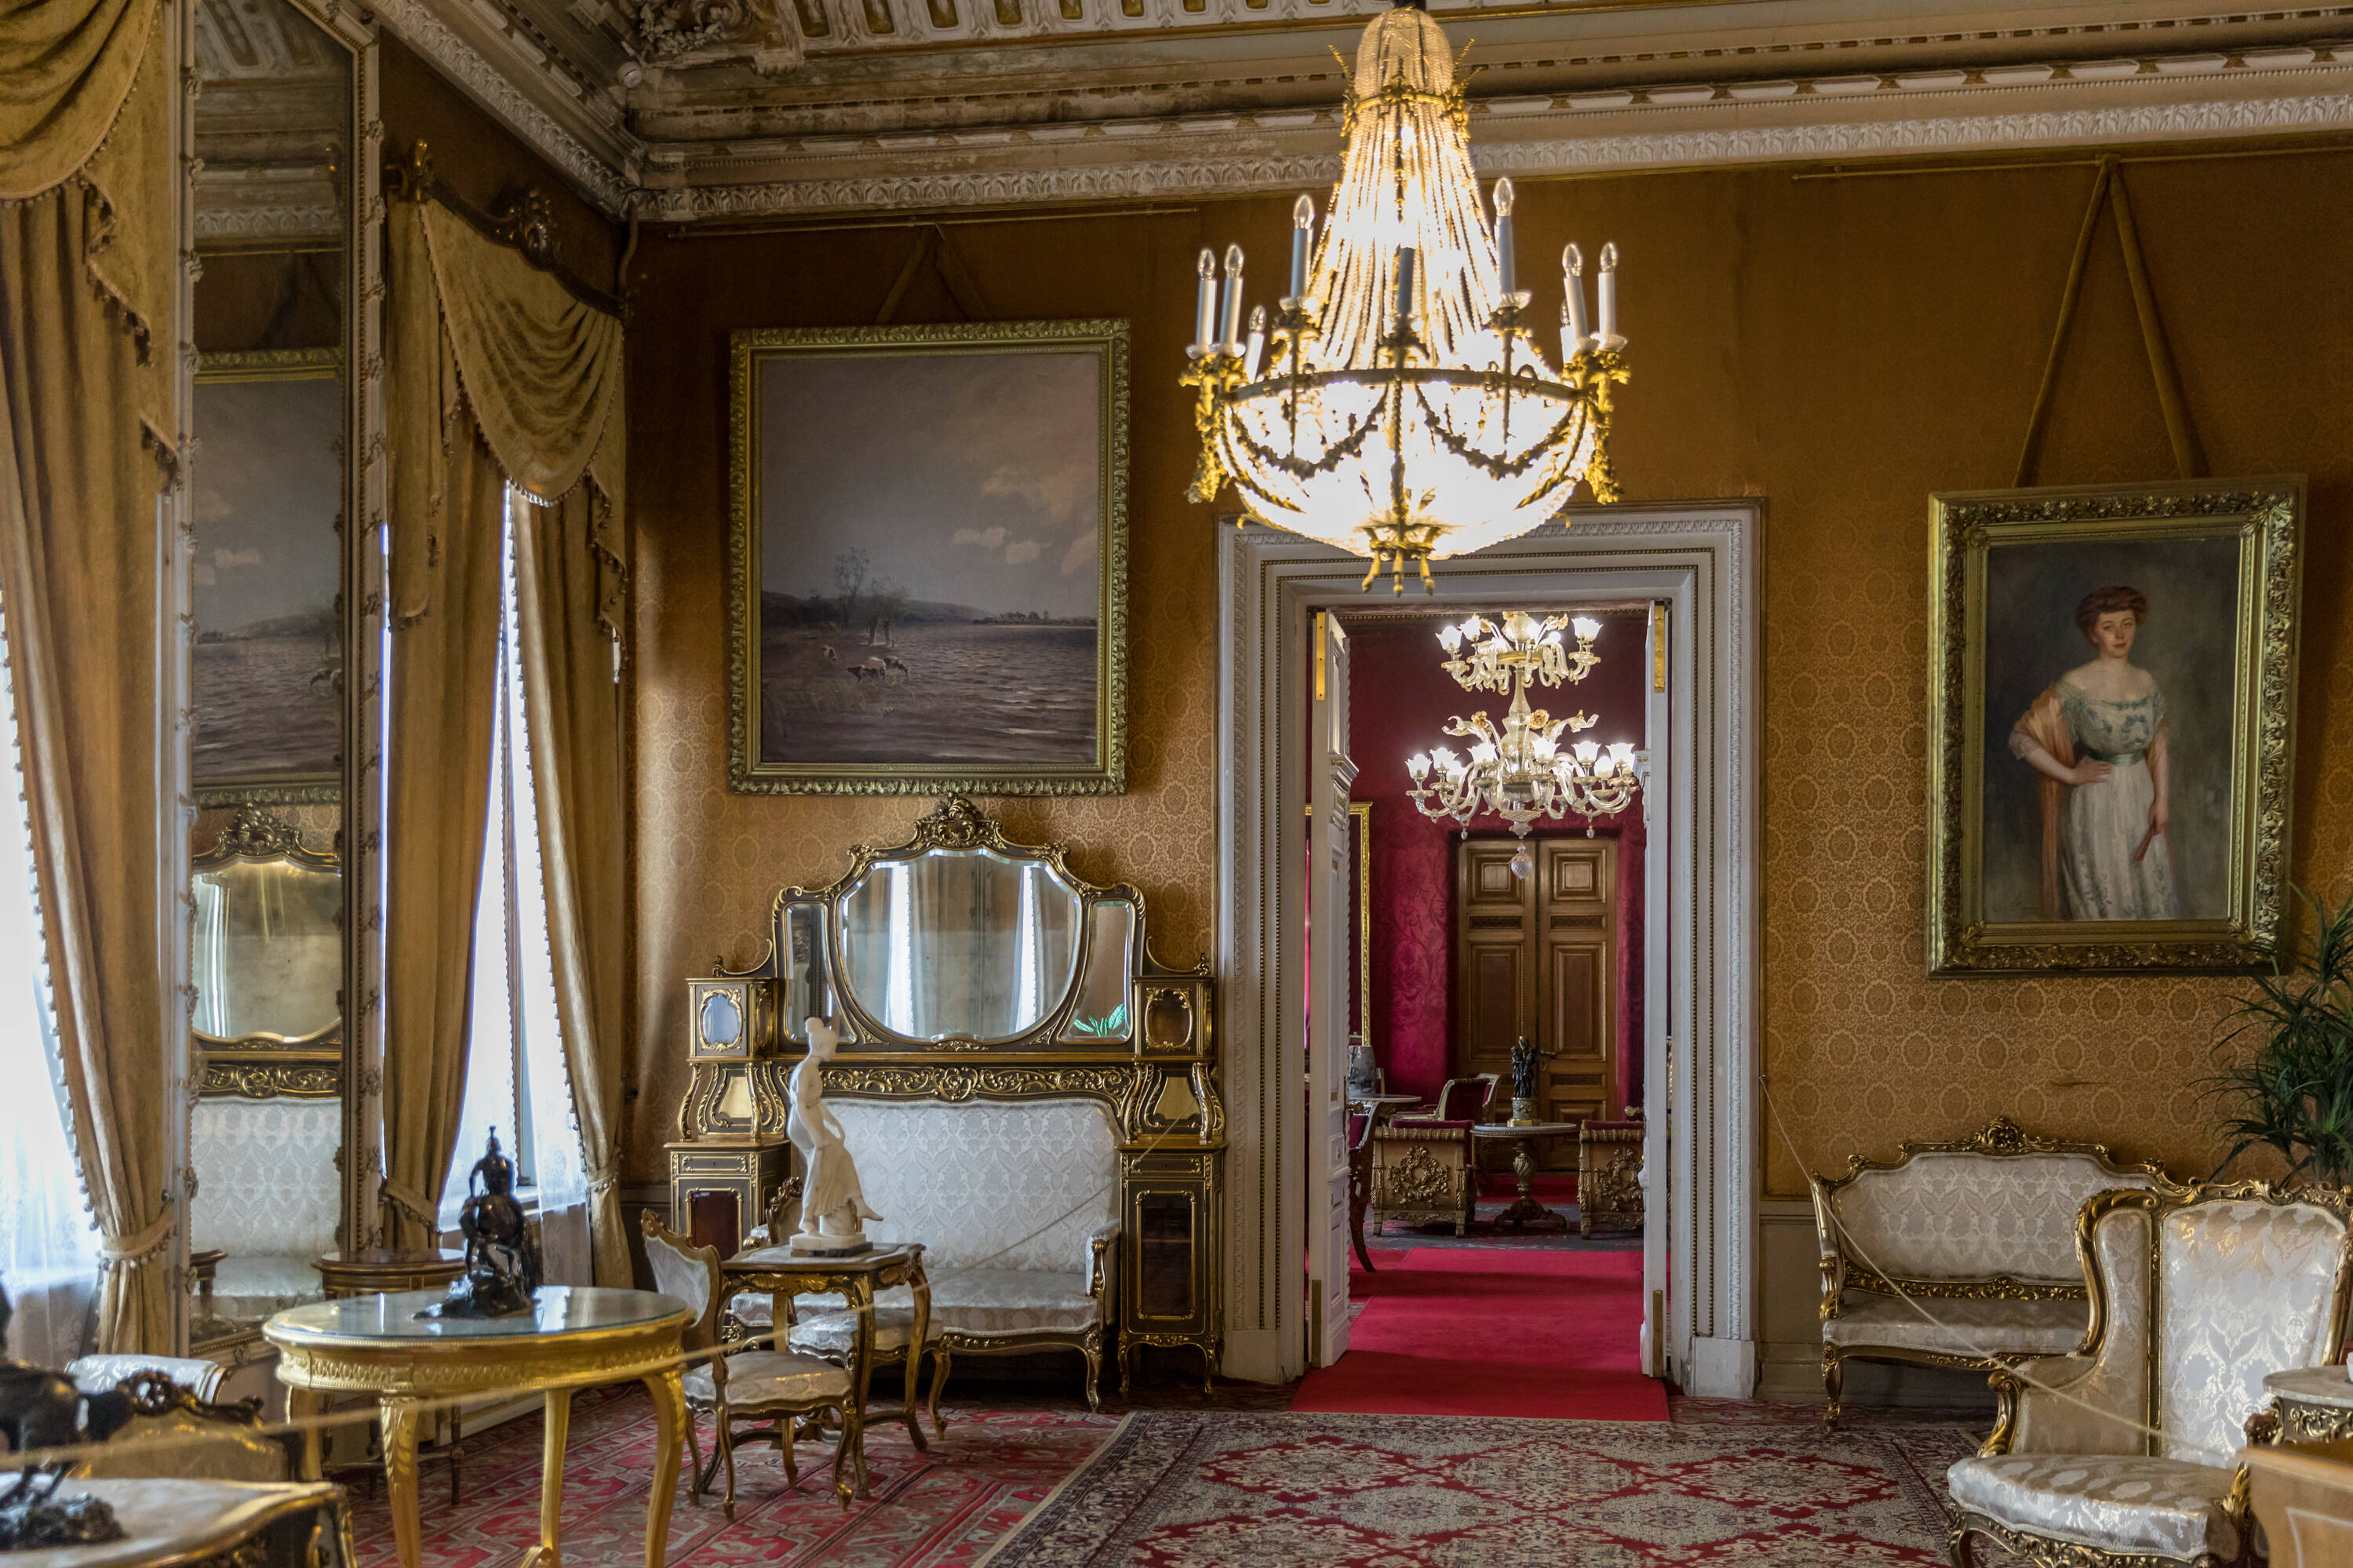 Убранство дома Великого князя Владимира Александровича на Дворцовой набережной (фото: Ninara CC BY 2.0)